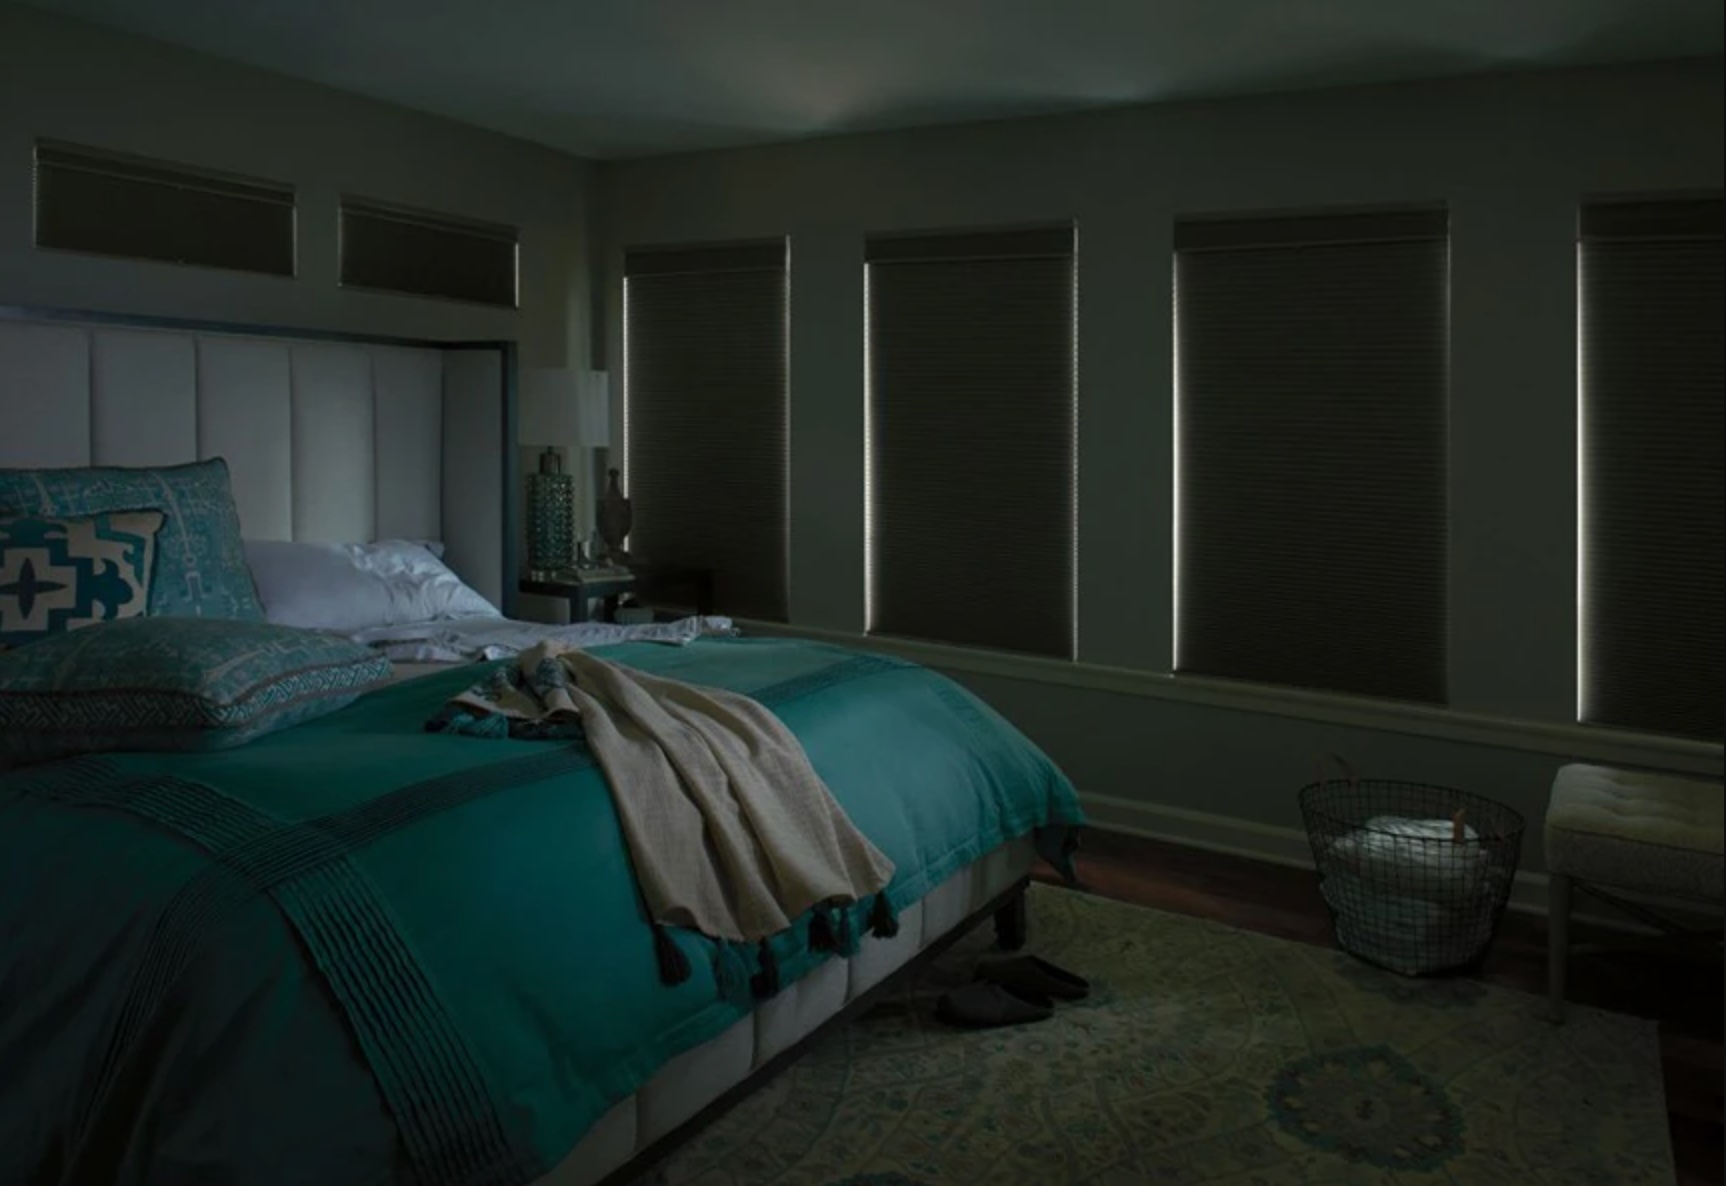 Levolor's Blackout Cellular Shades (in Tree bark and Light Fog) Eliminate Natural Light in a Bedroom